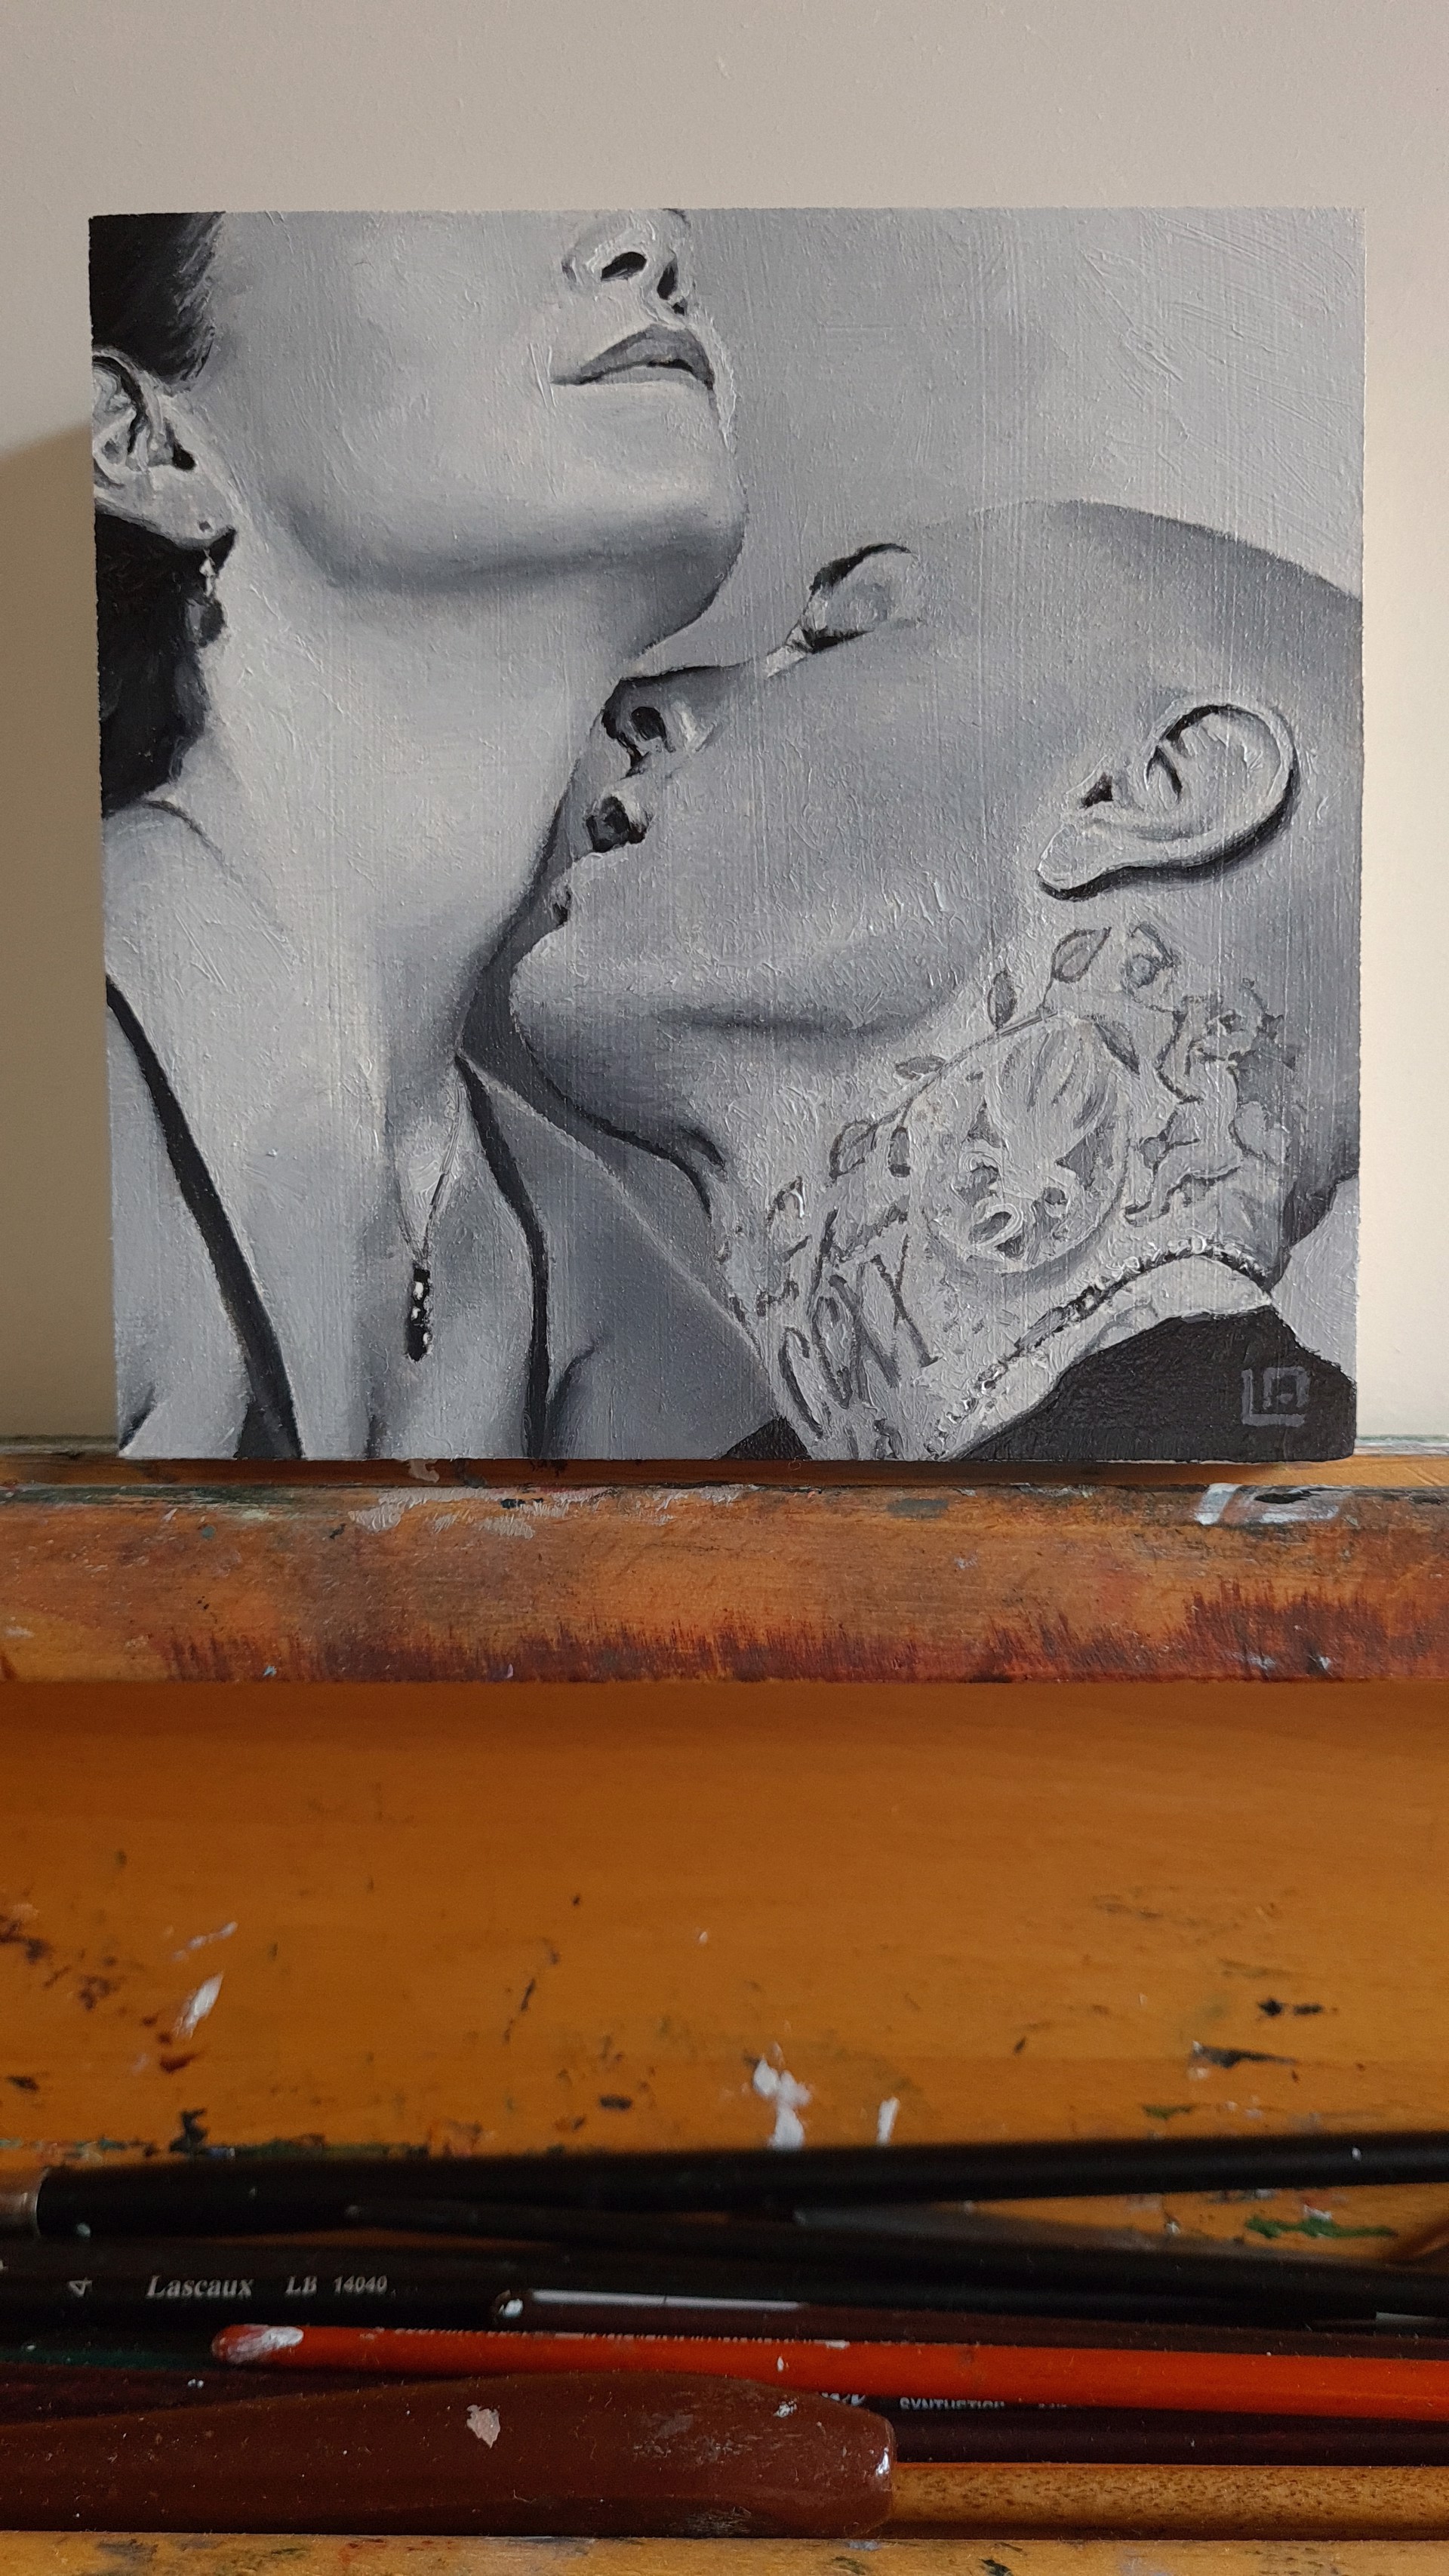 The Kiss #2 by Linda Delahaye